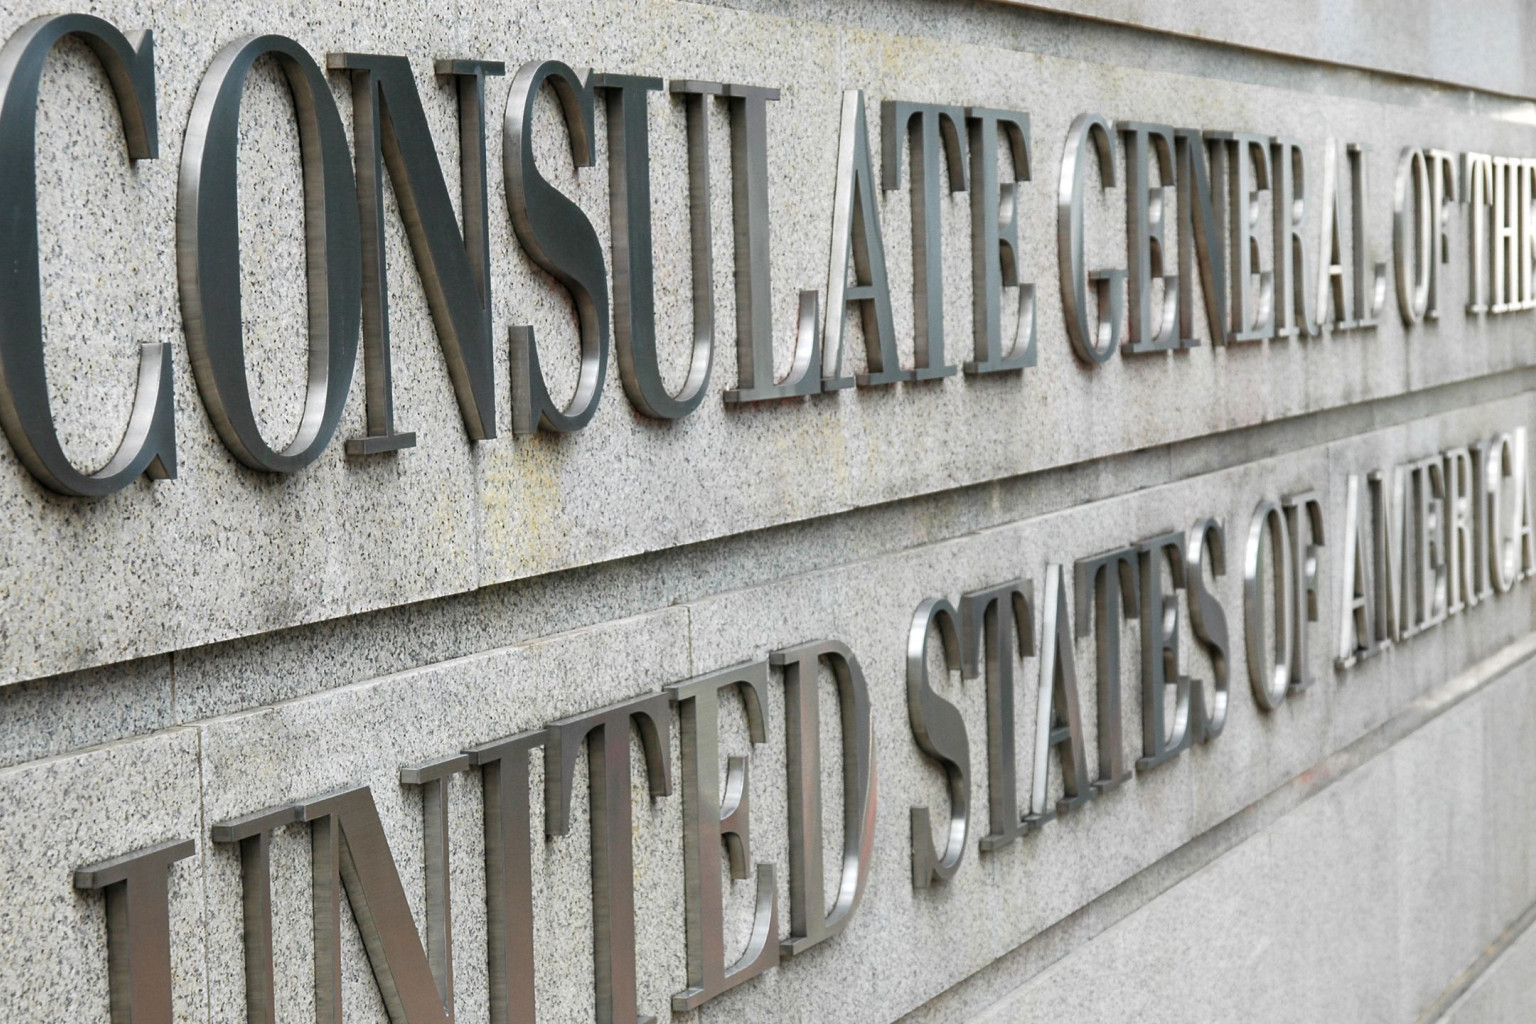 Schriftzug vom Consulate General of the United States